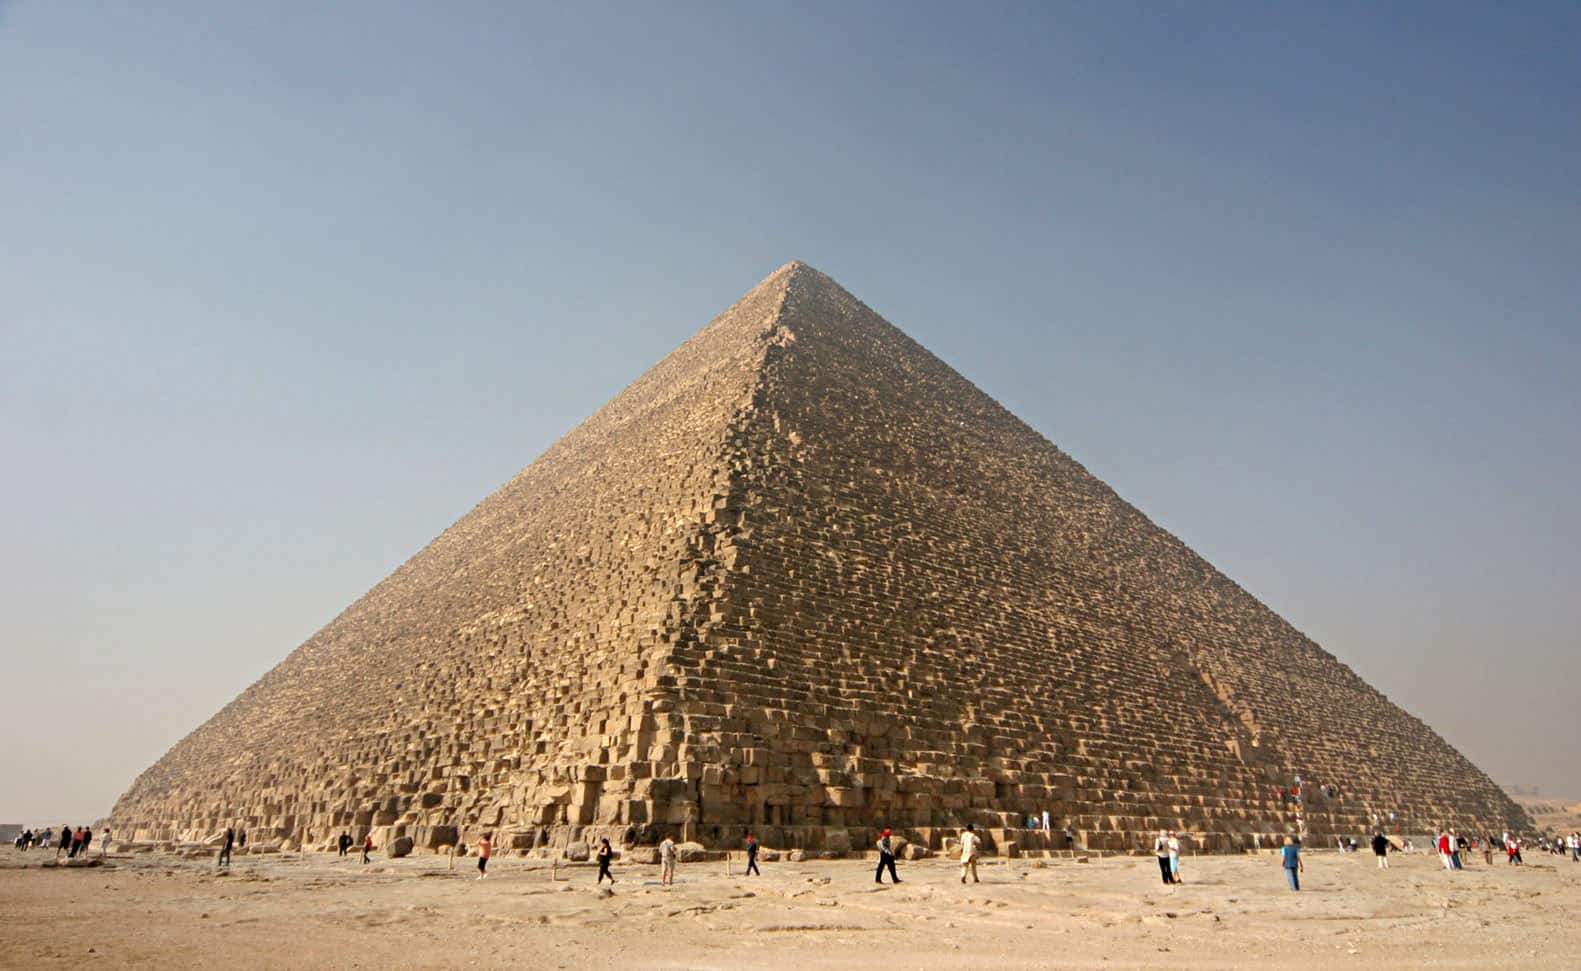 Khufu Pyramid, the great pyramids of Giza